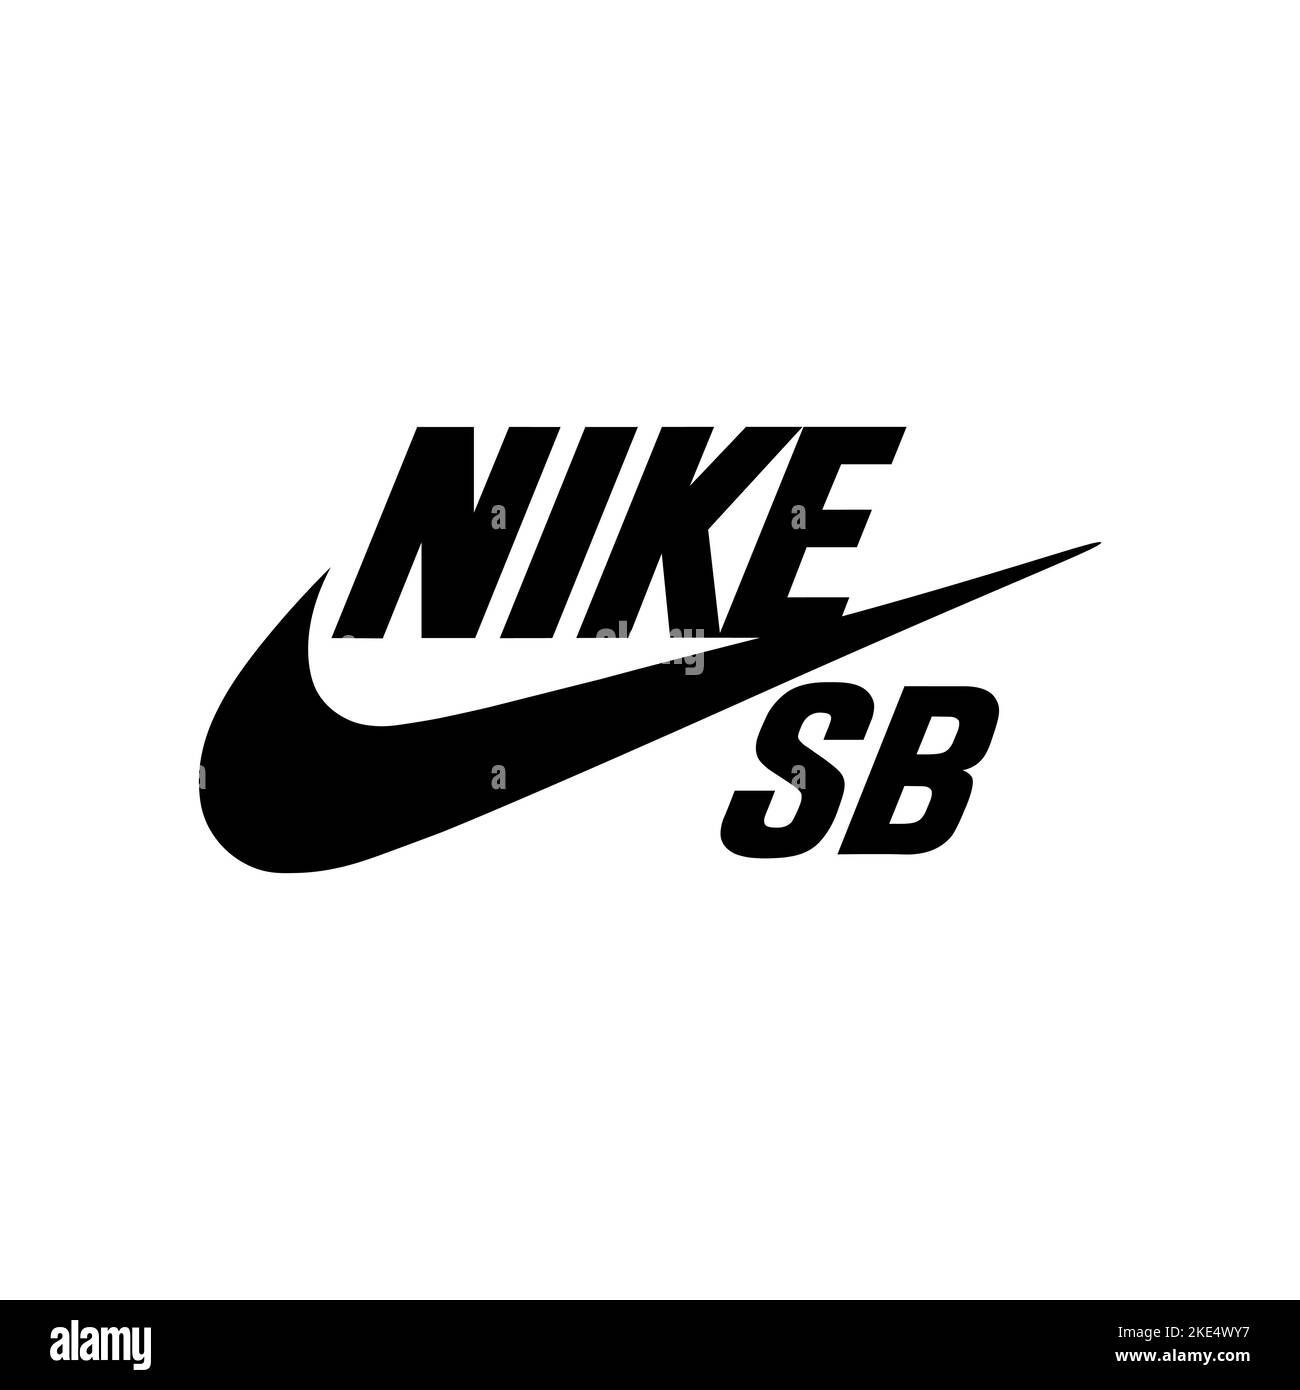 Nike Black and White Stock Photos & Images - Alamy